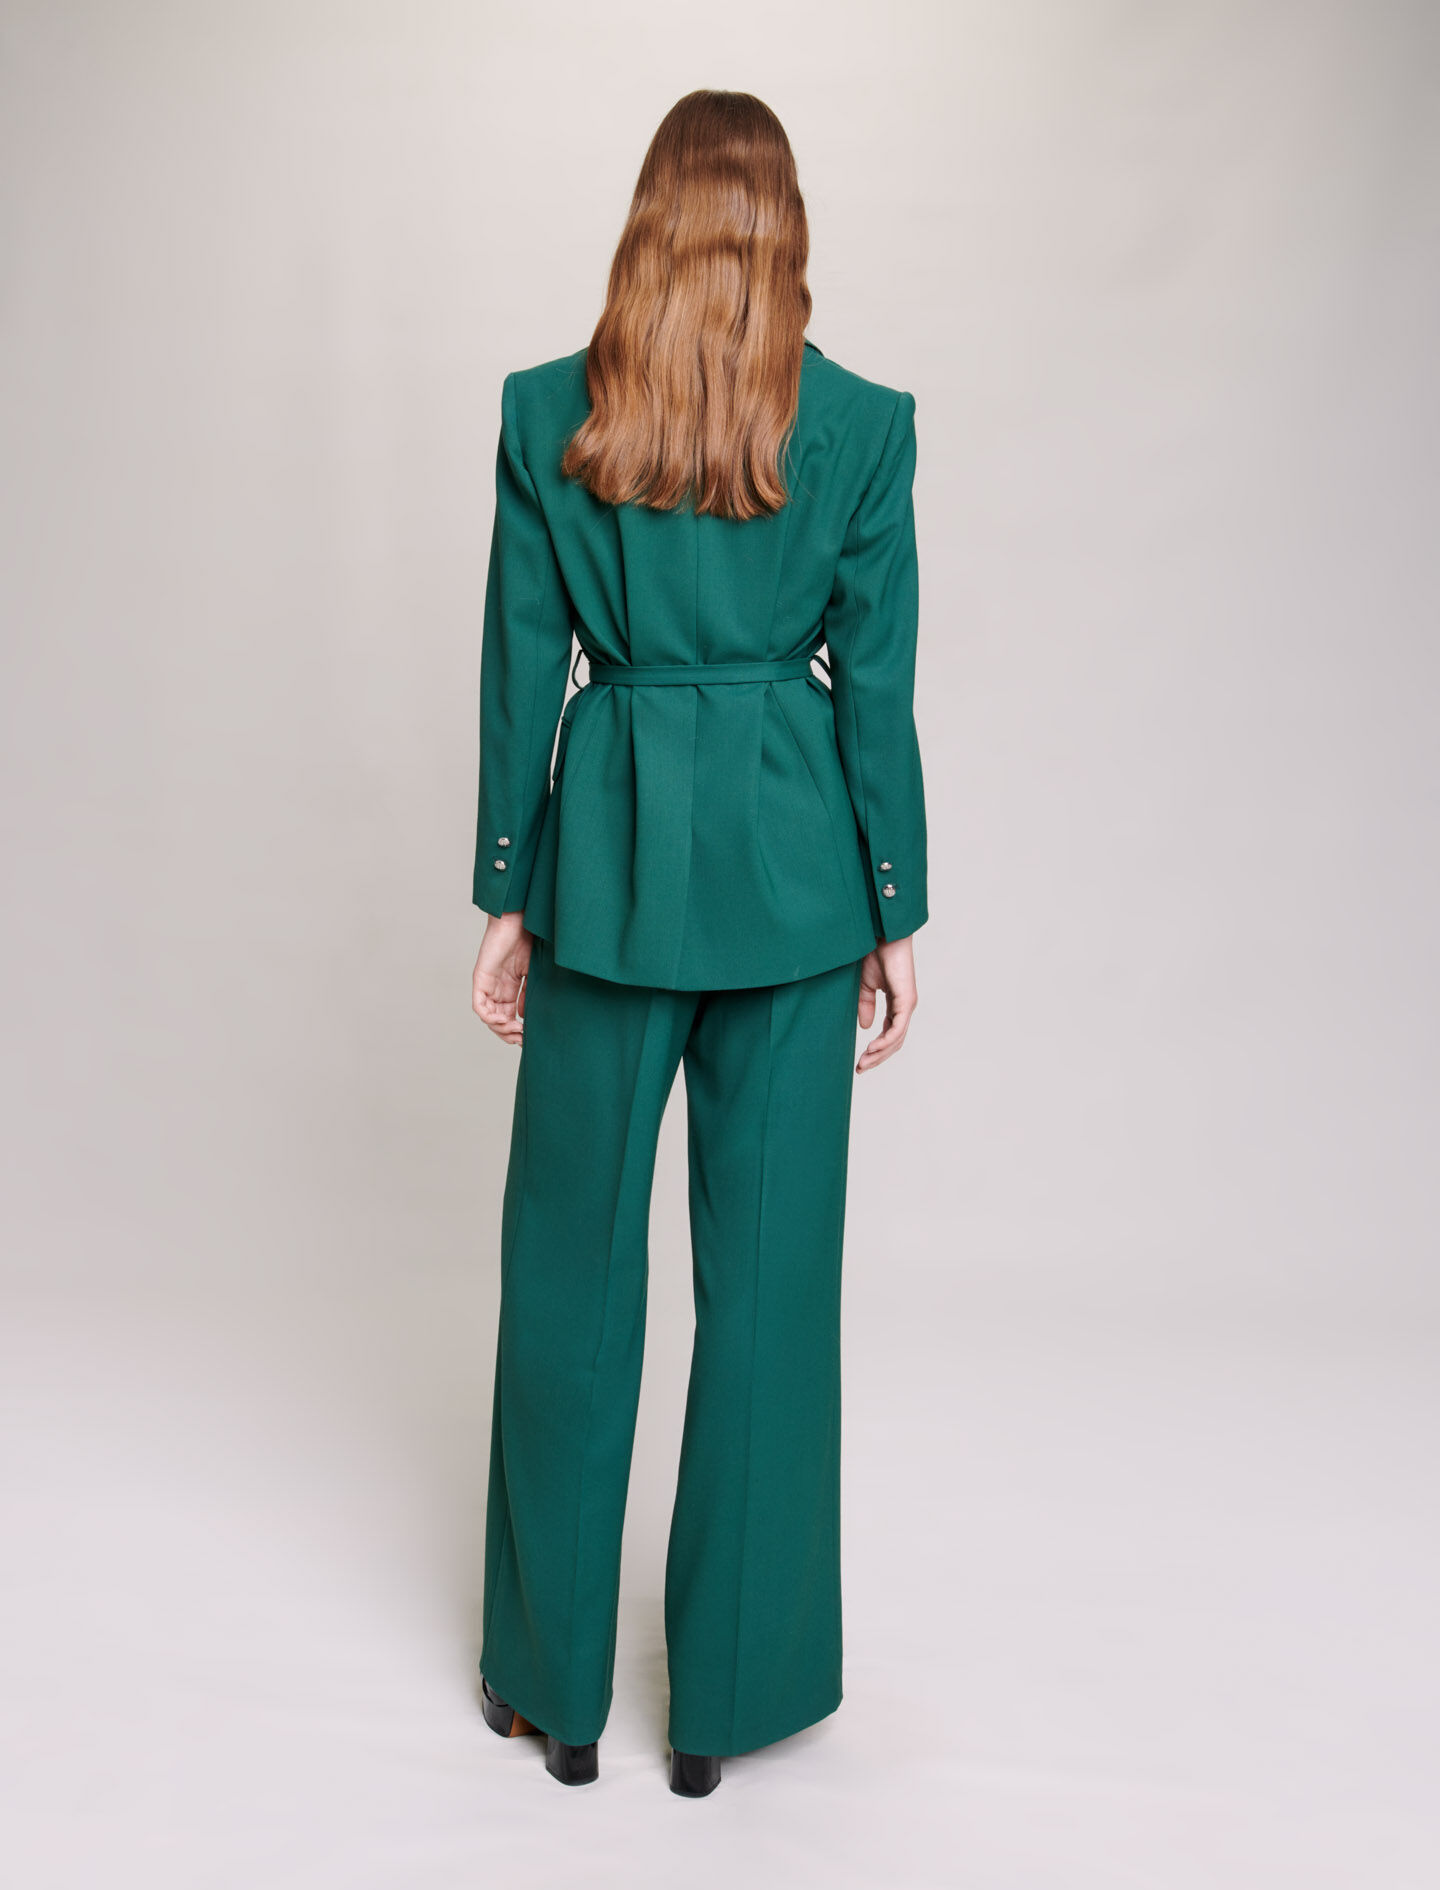 Women's Blazers - Suit Jackets for Women - Express